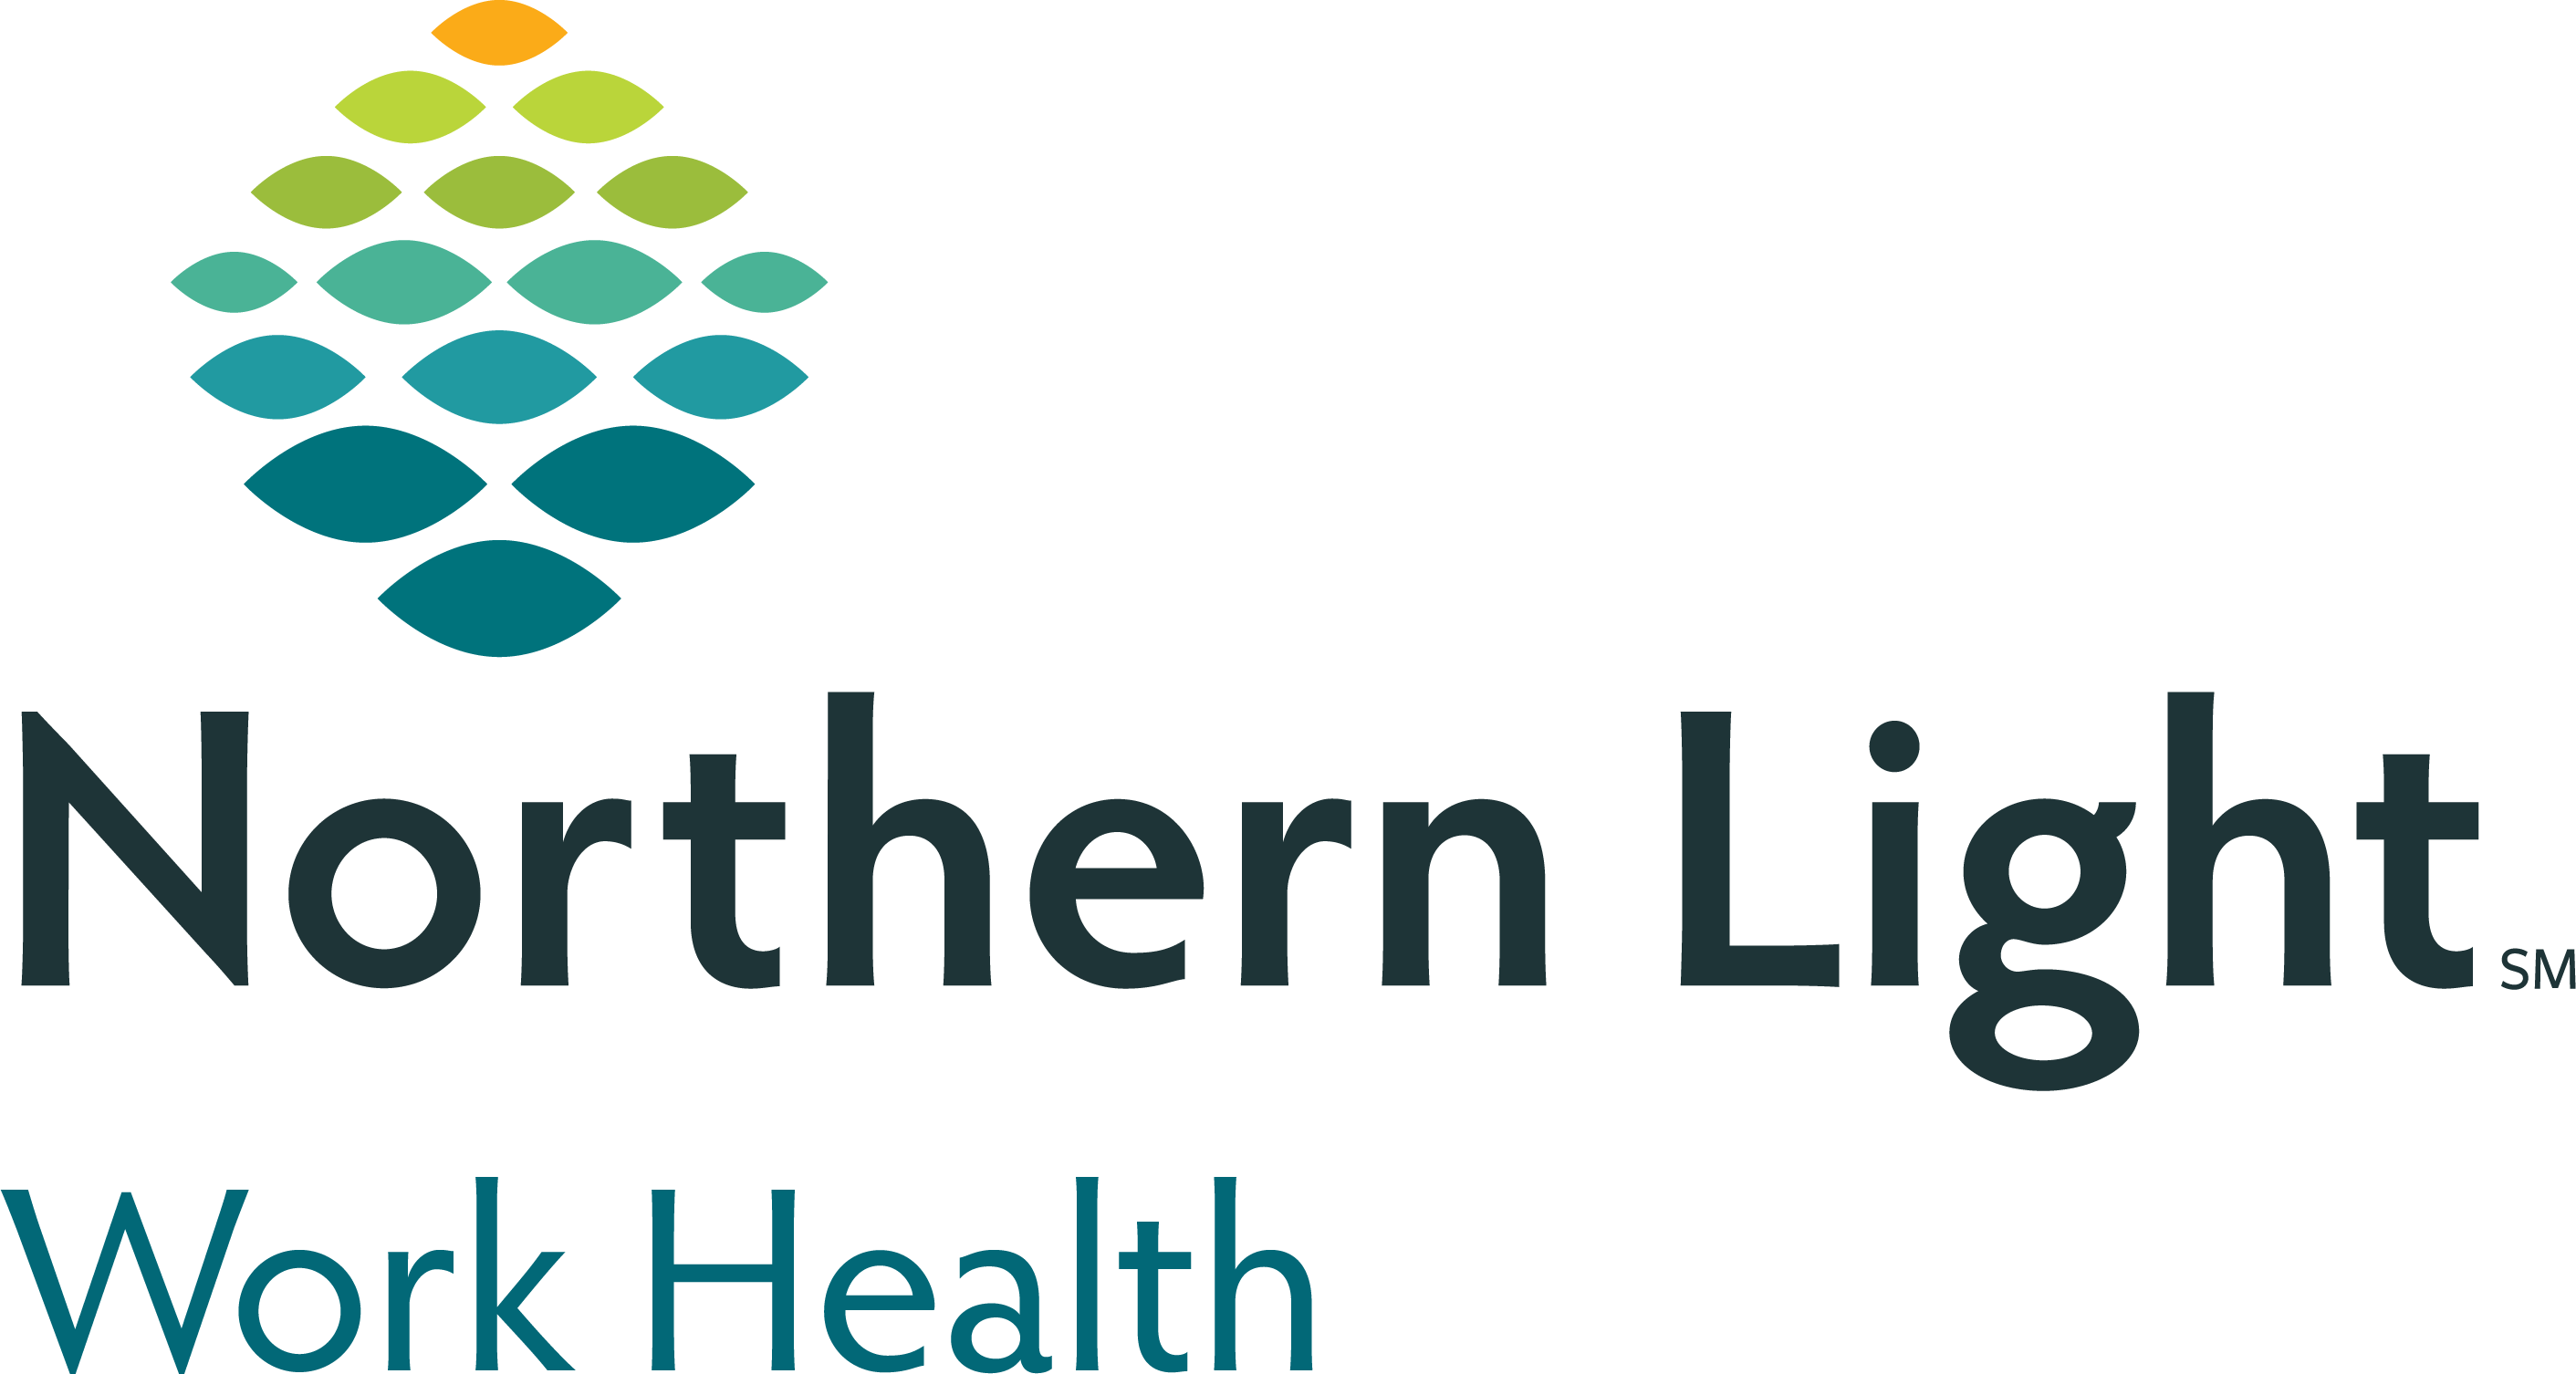 Northern Light Work Health